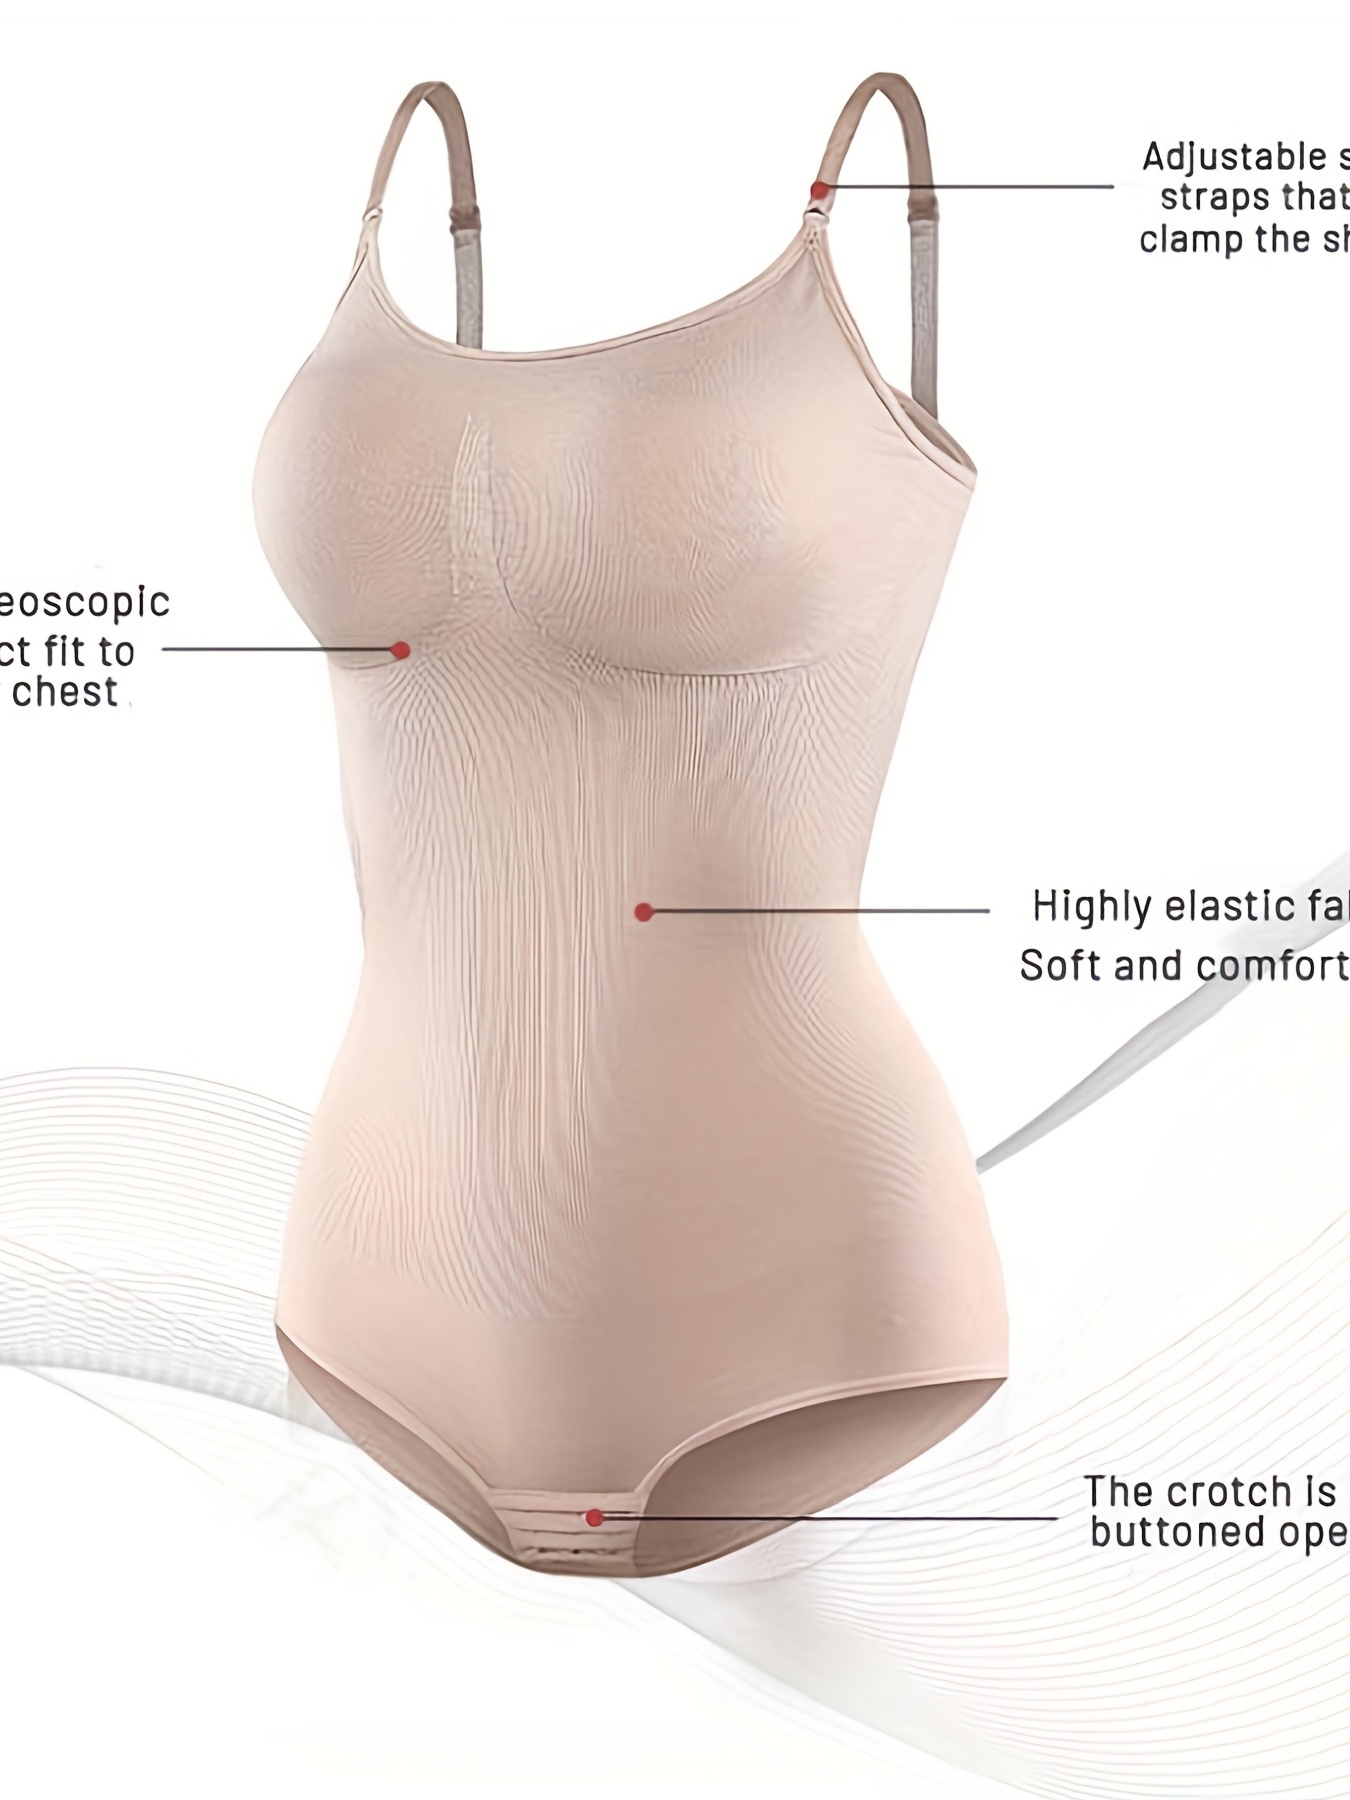 Thong Shapewear Bodysuit for Women Tummy Control Body Shaper